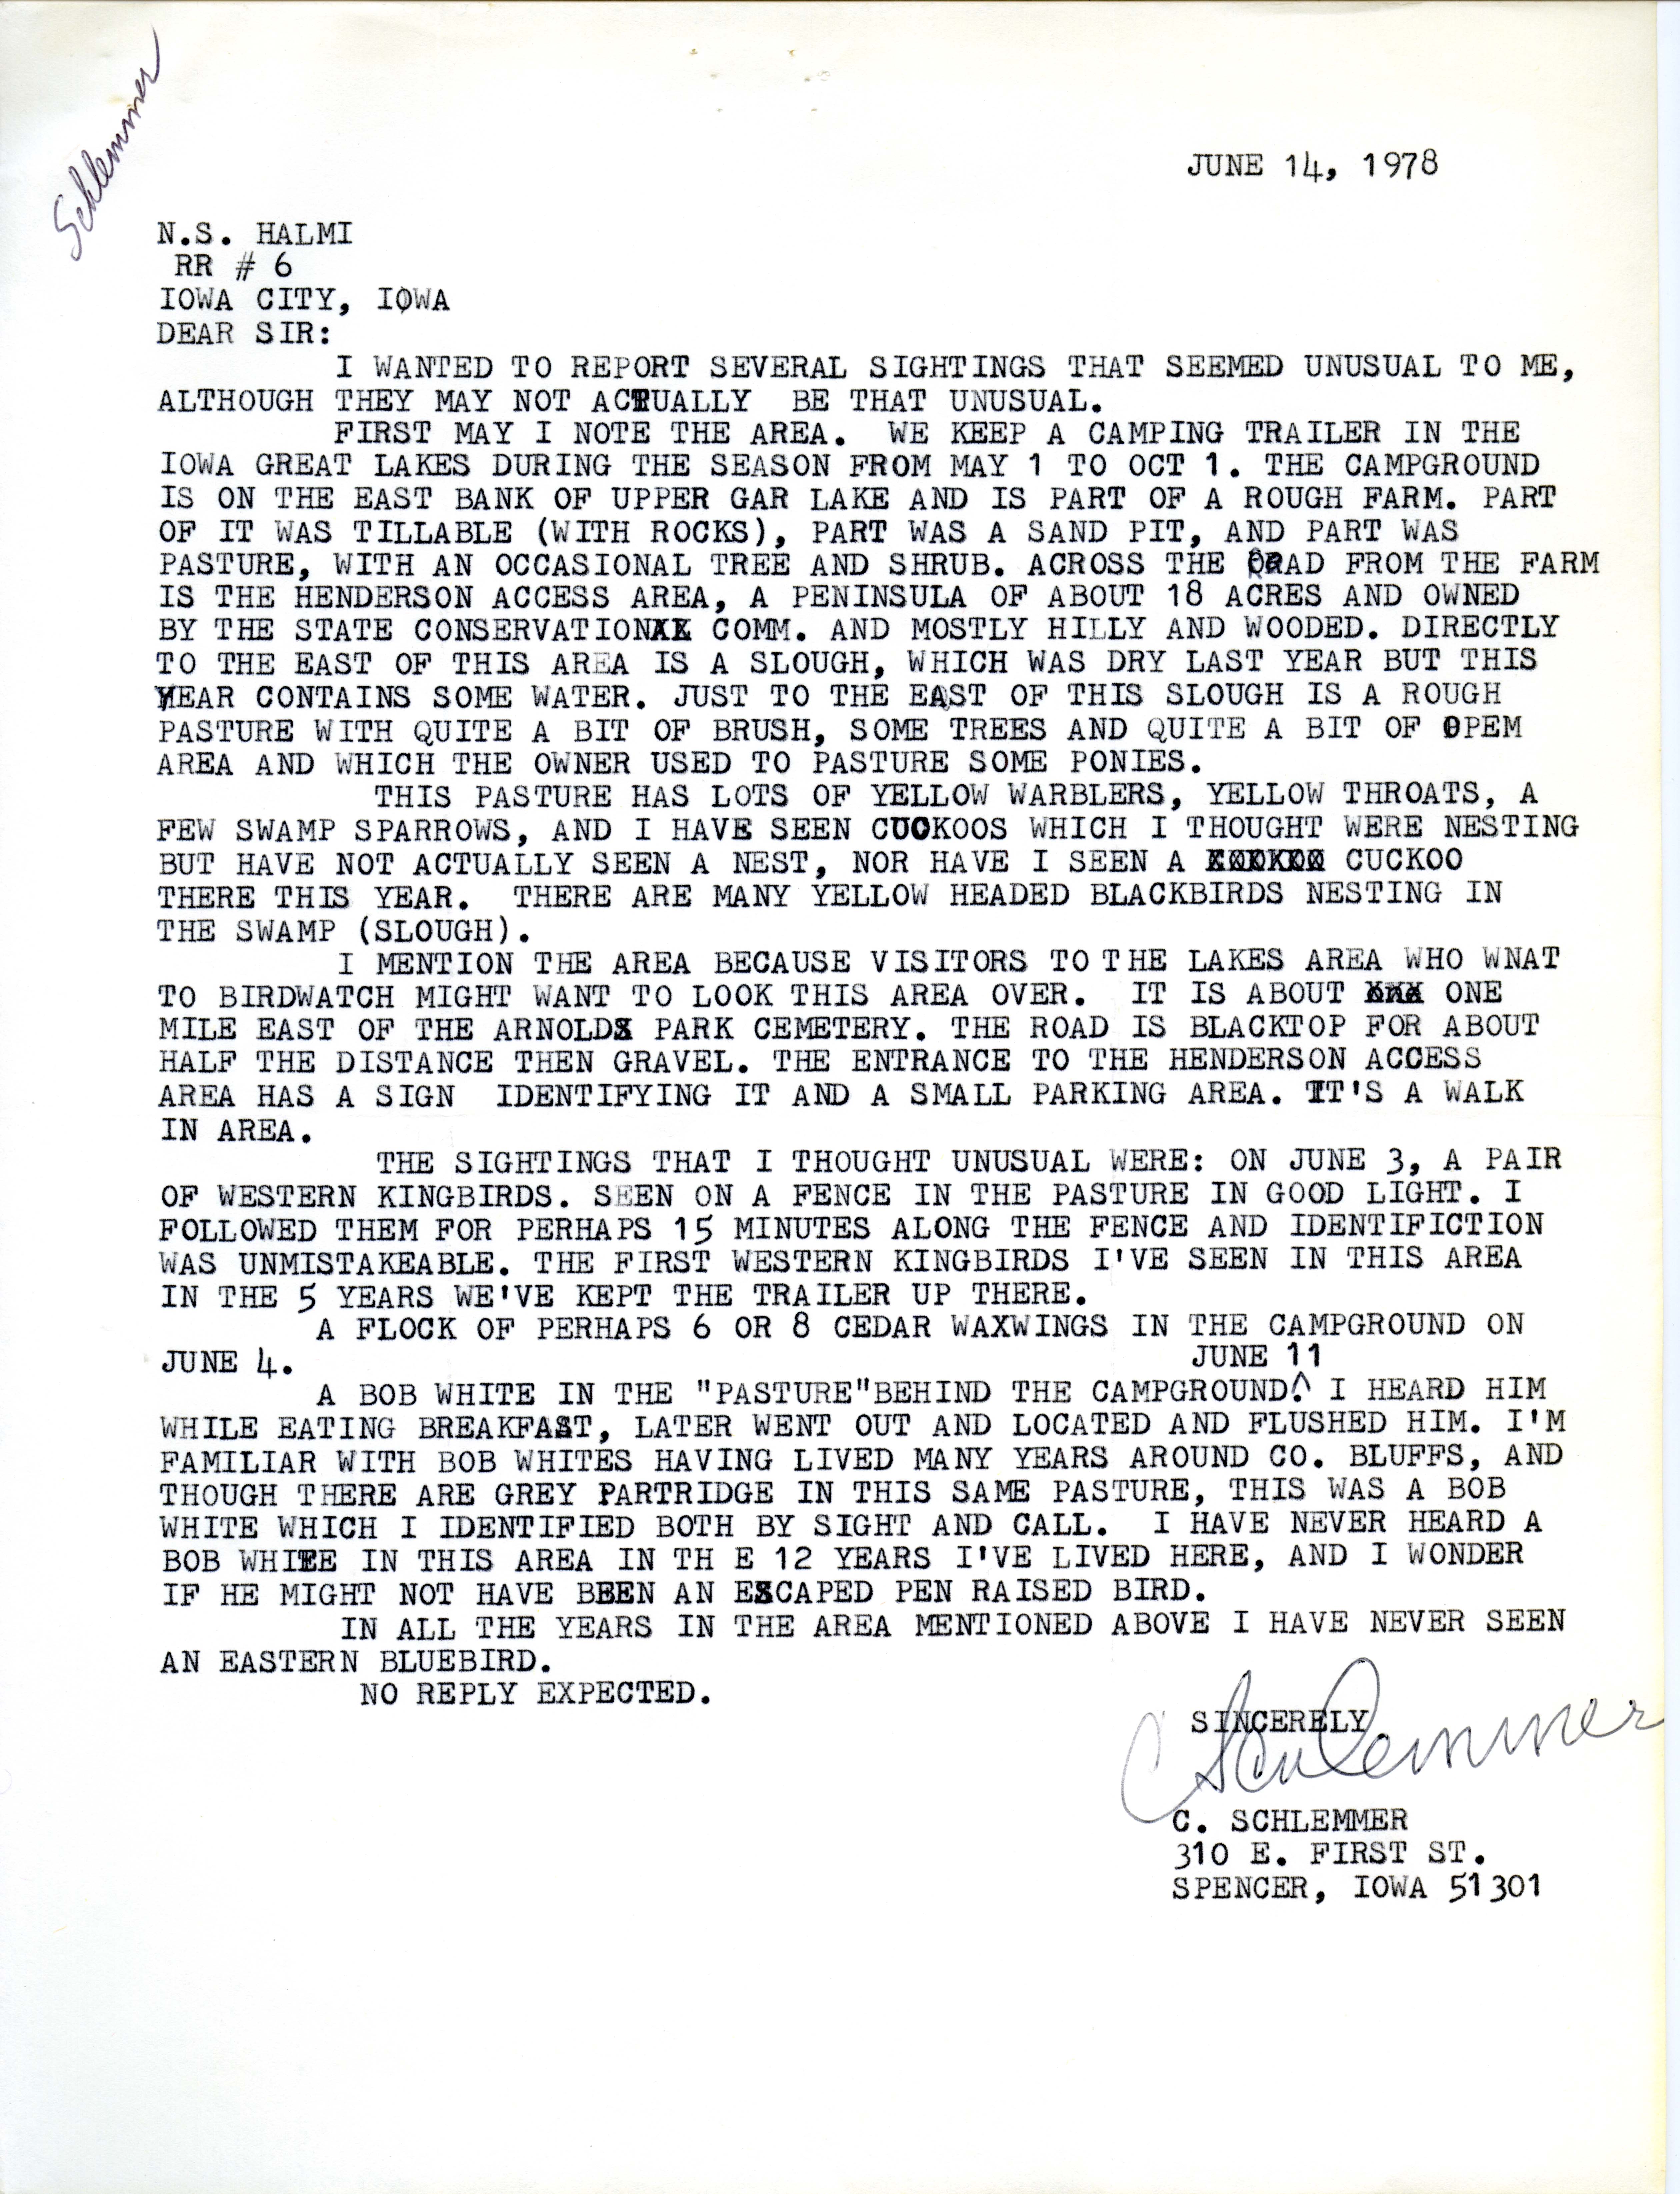 Conrad F. Schlemmer letter to Nicholas S. Halmi regarding bird sightings, June 14, 1978 